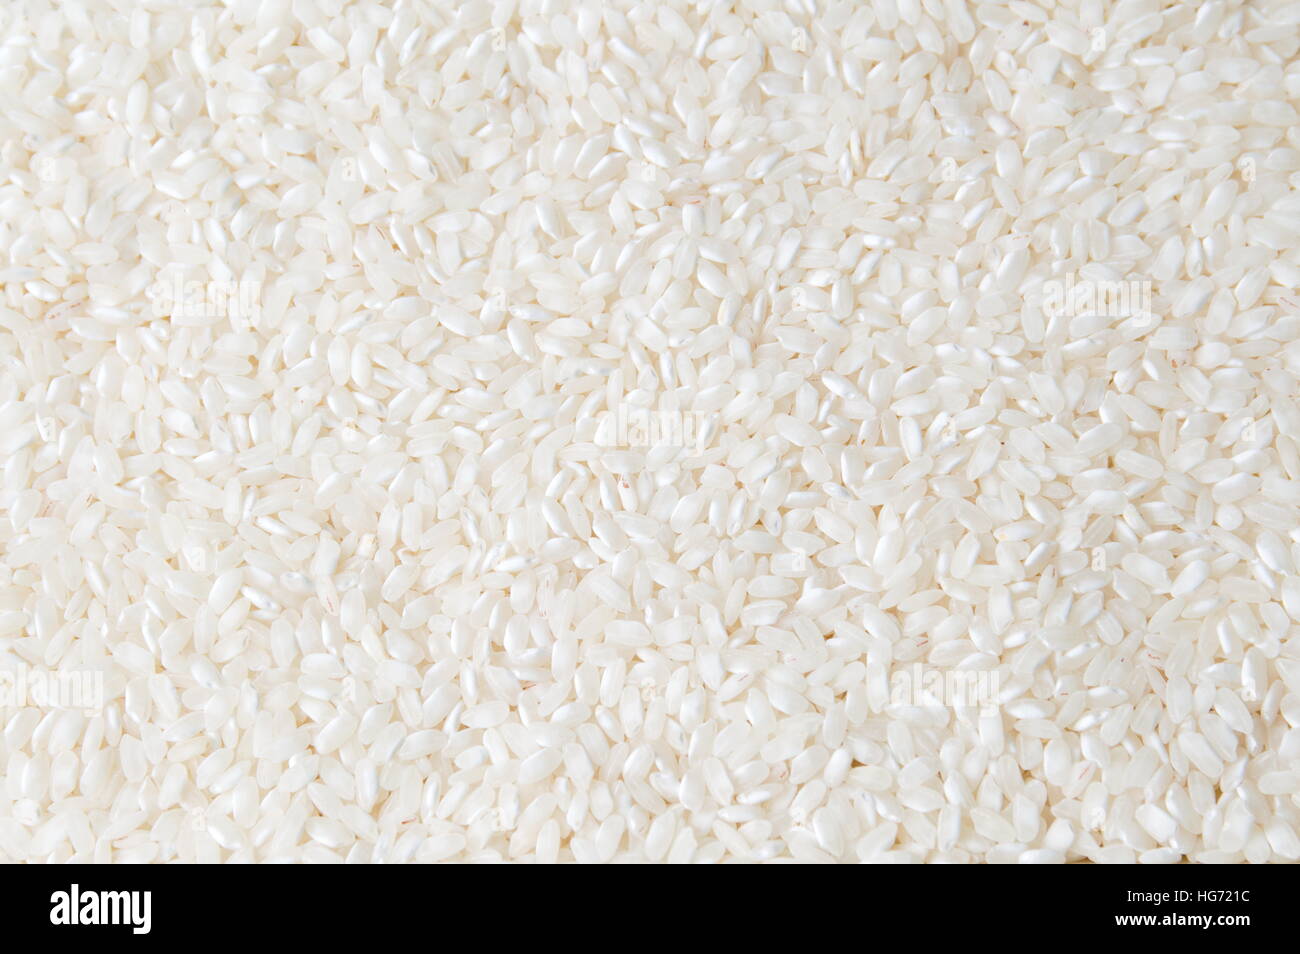 White rice grains background pattern texture Stock Photo